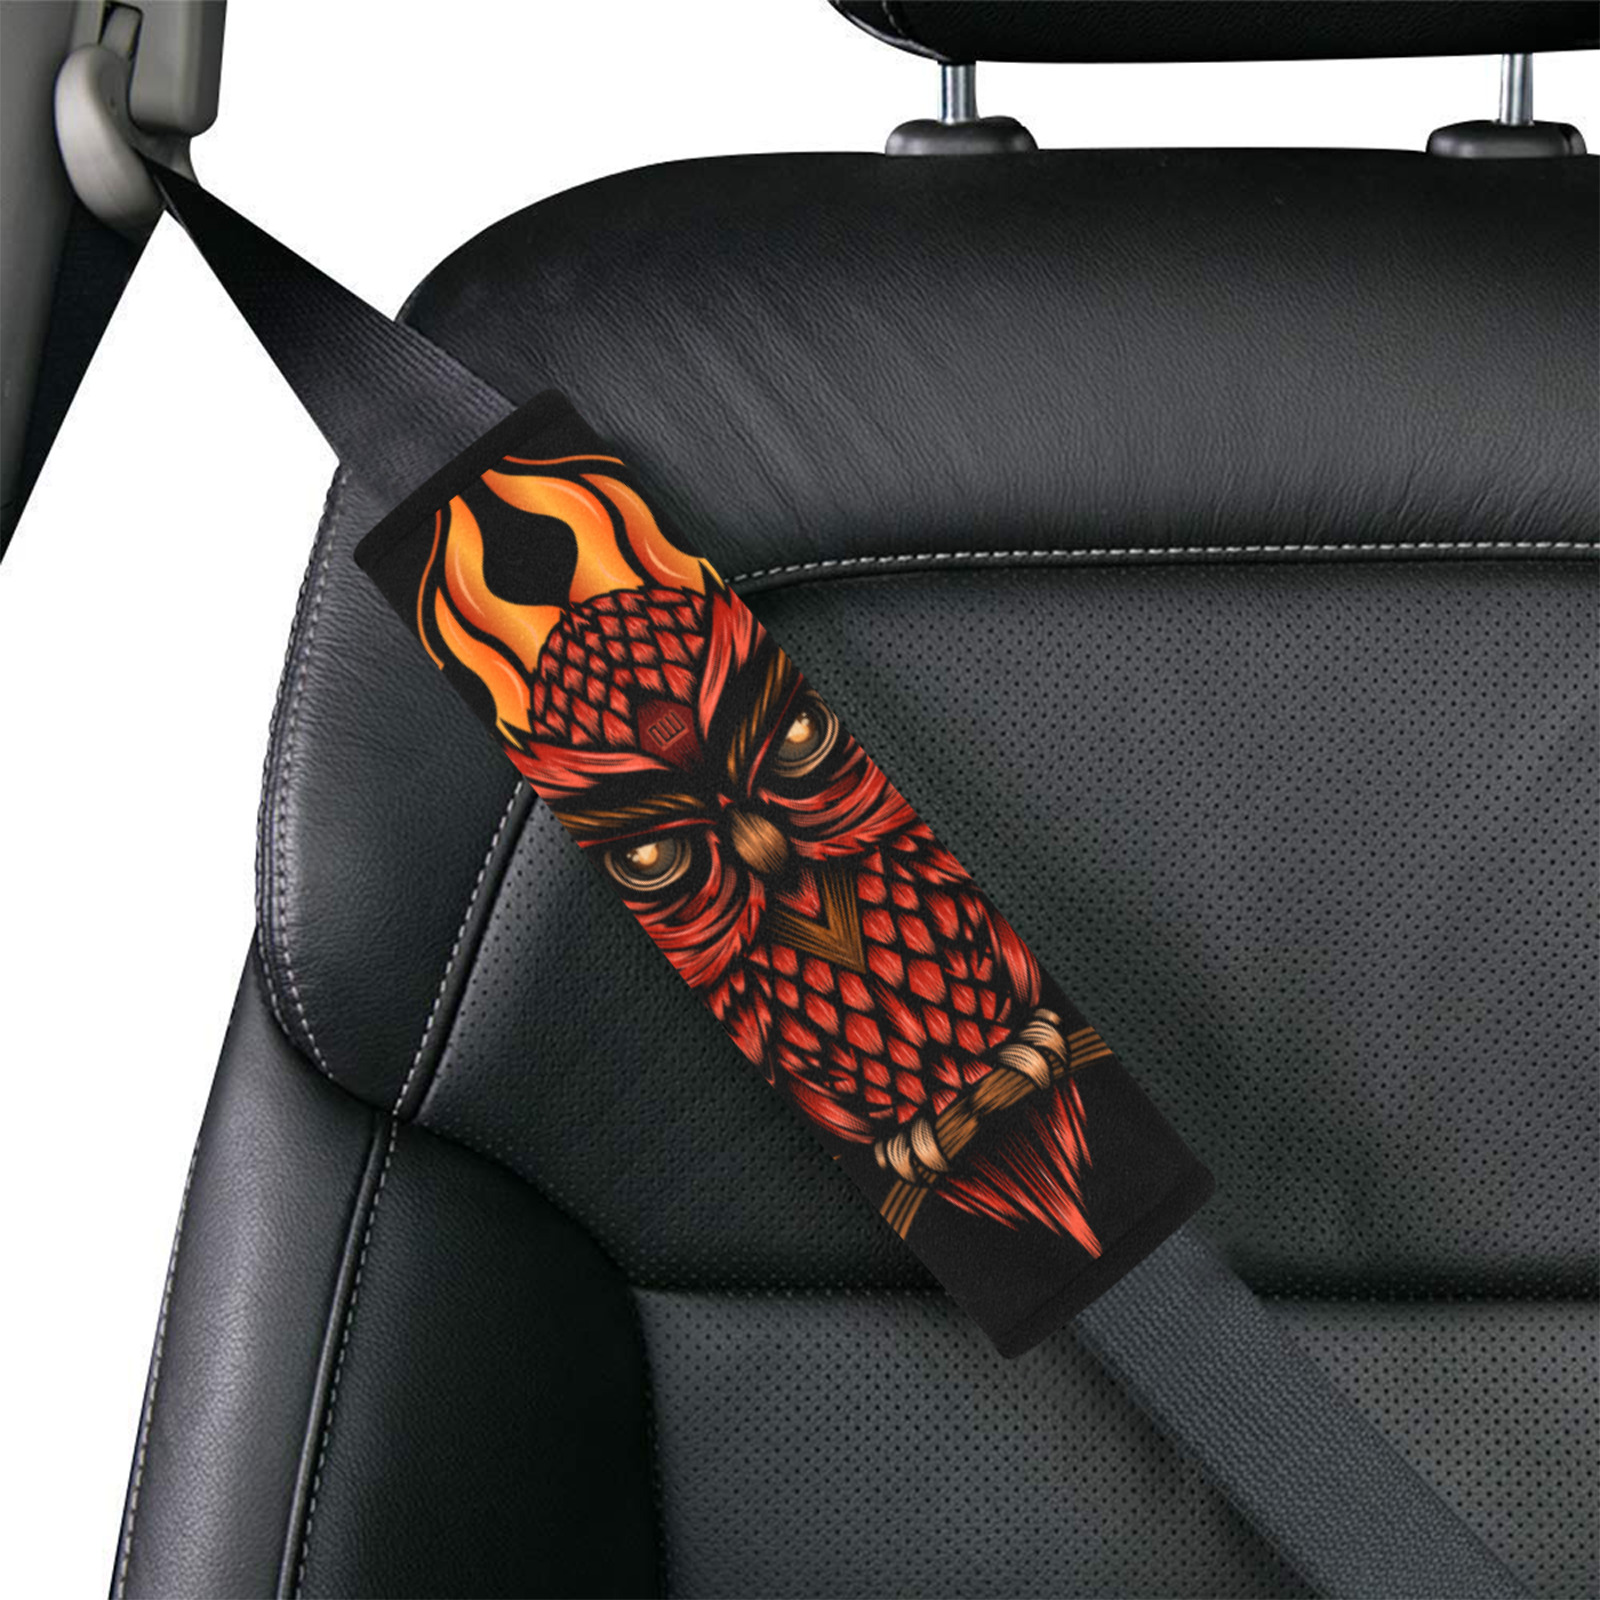 Fire Owl Car Seat Belt Cover 7''x10''